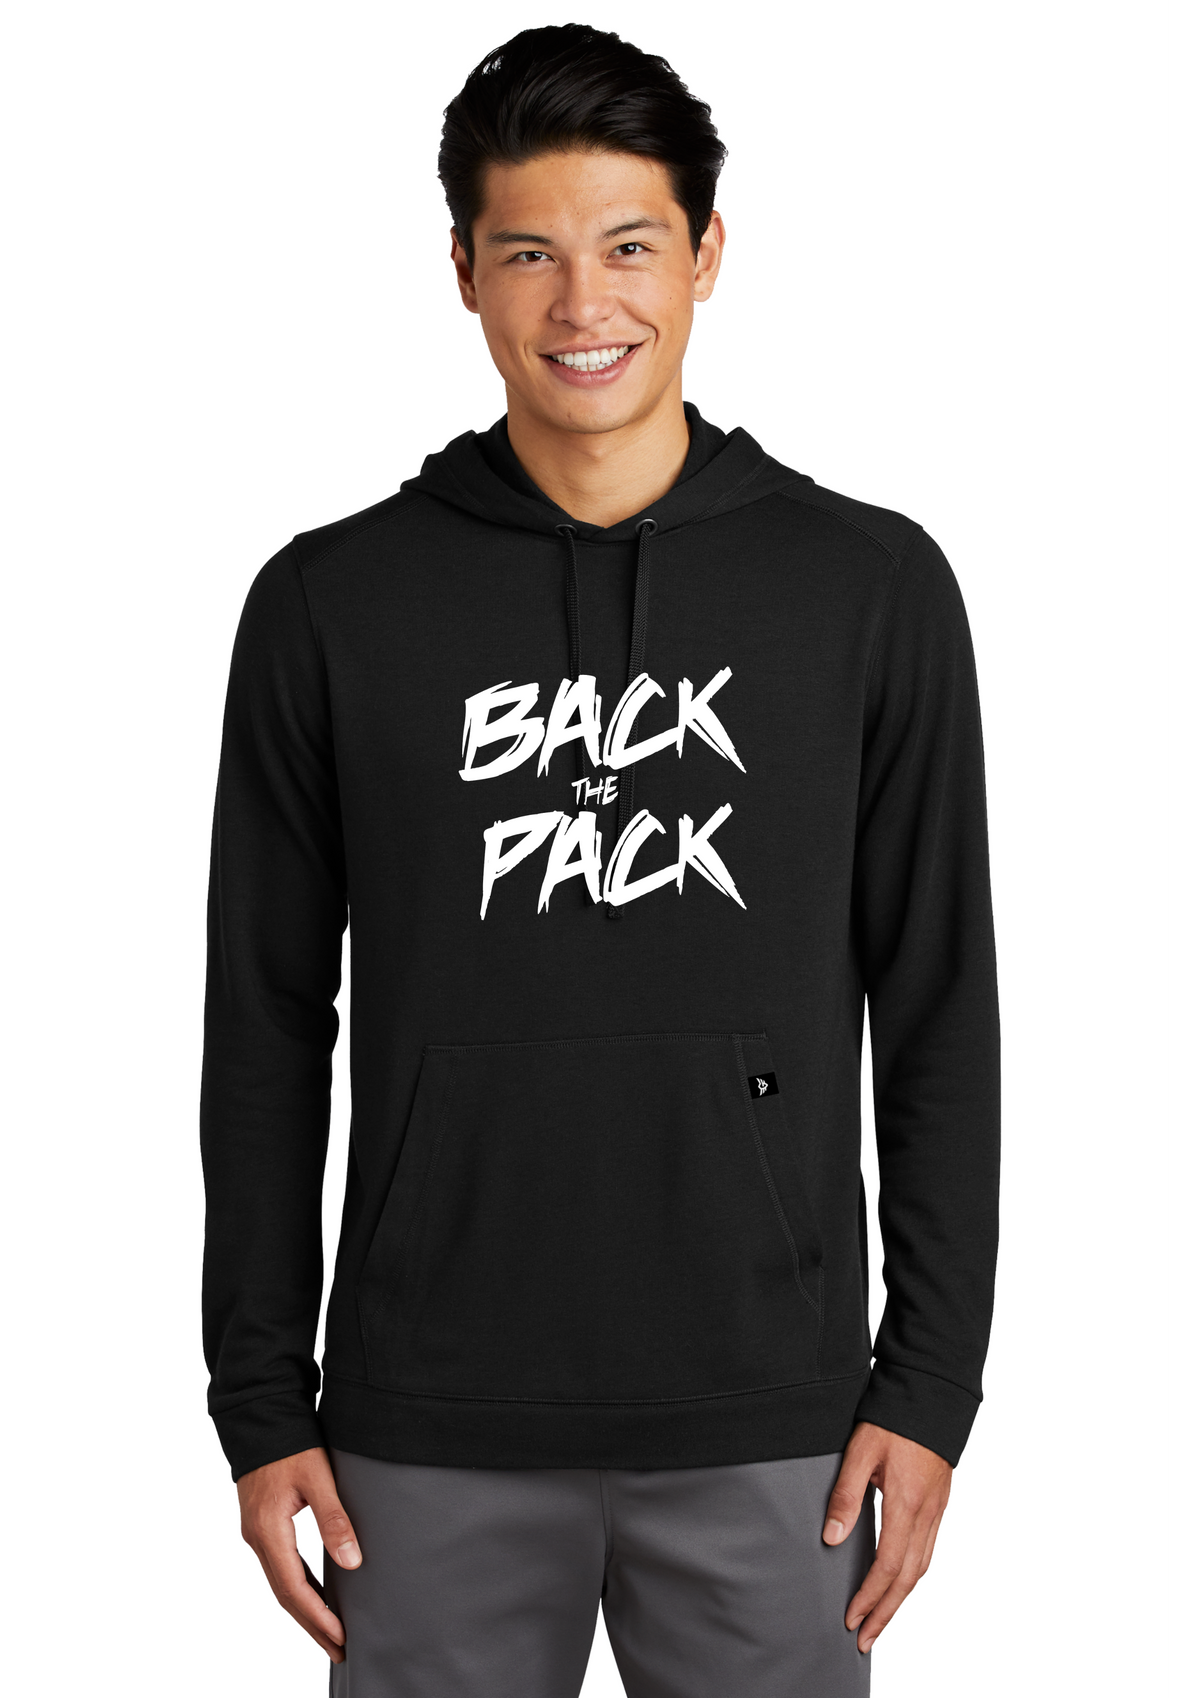 Northwood University | Street Series | [DTF] Unisex Tri-Blend Pullover Hoodie Back The Pack Black {#NWU007}